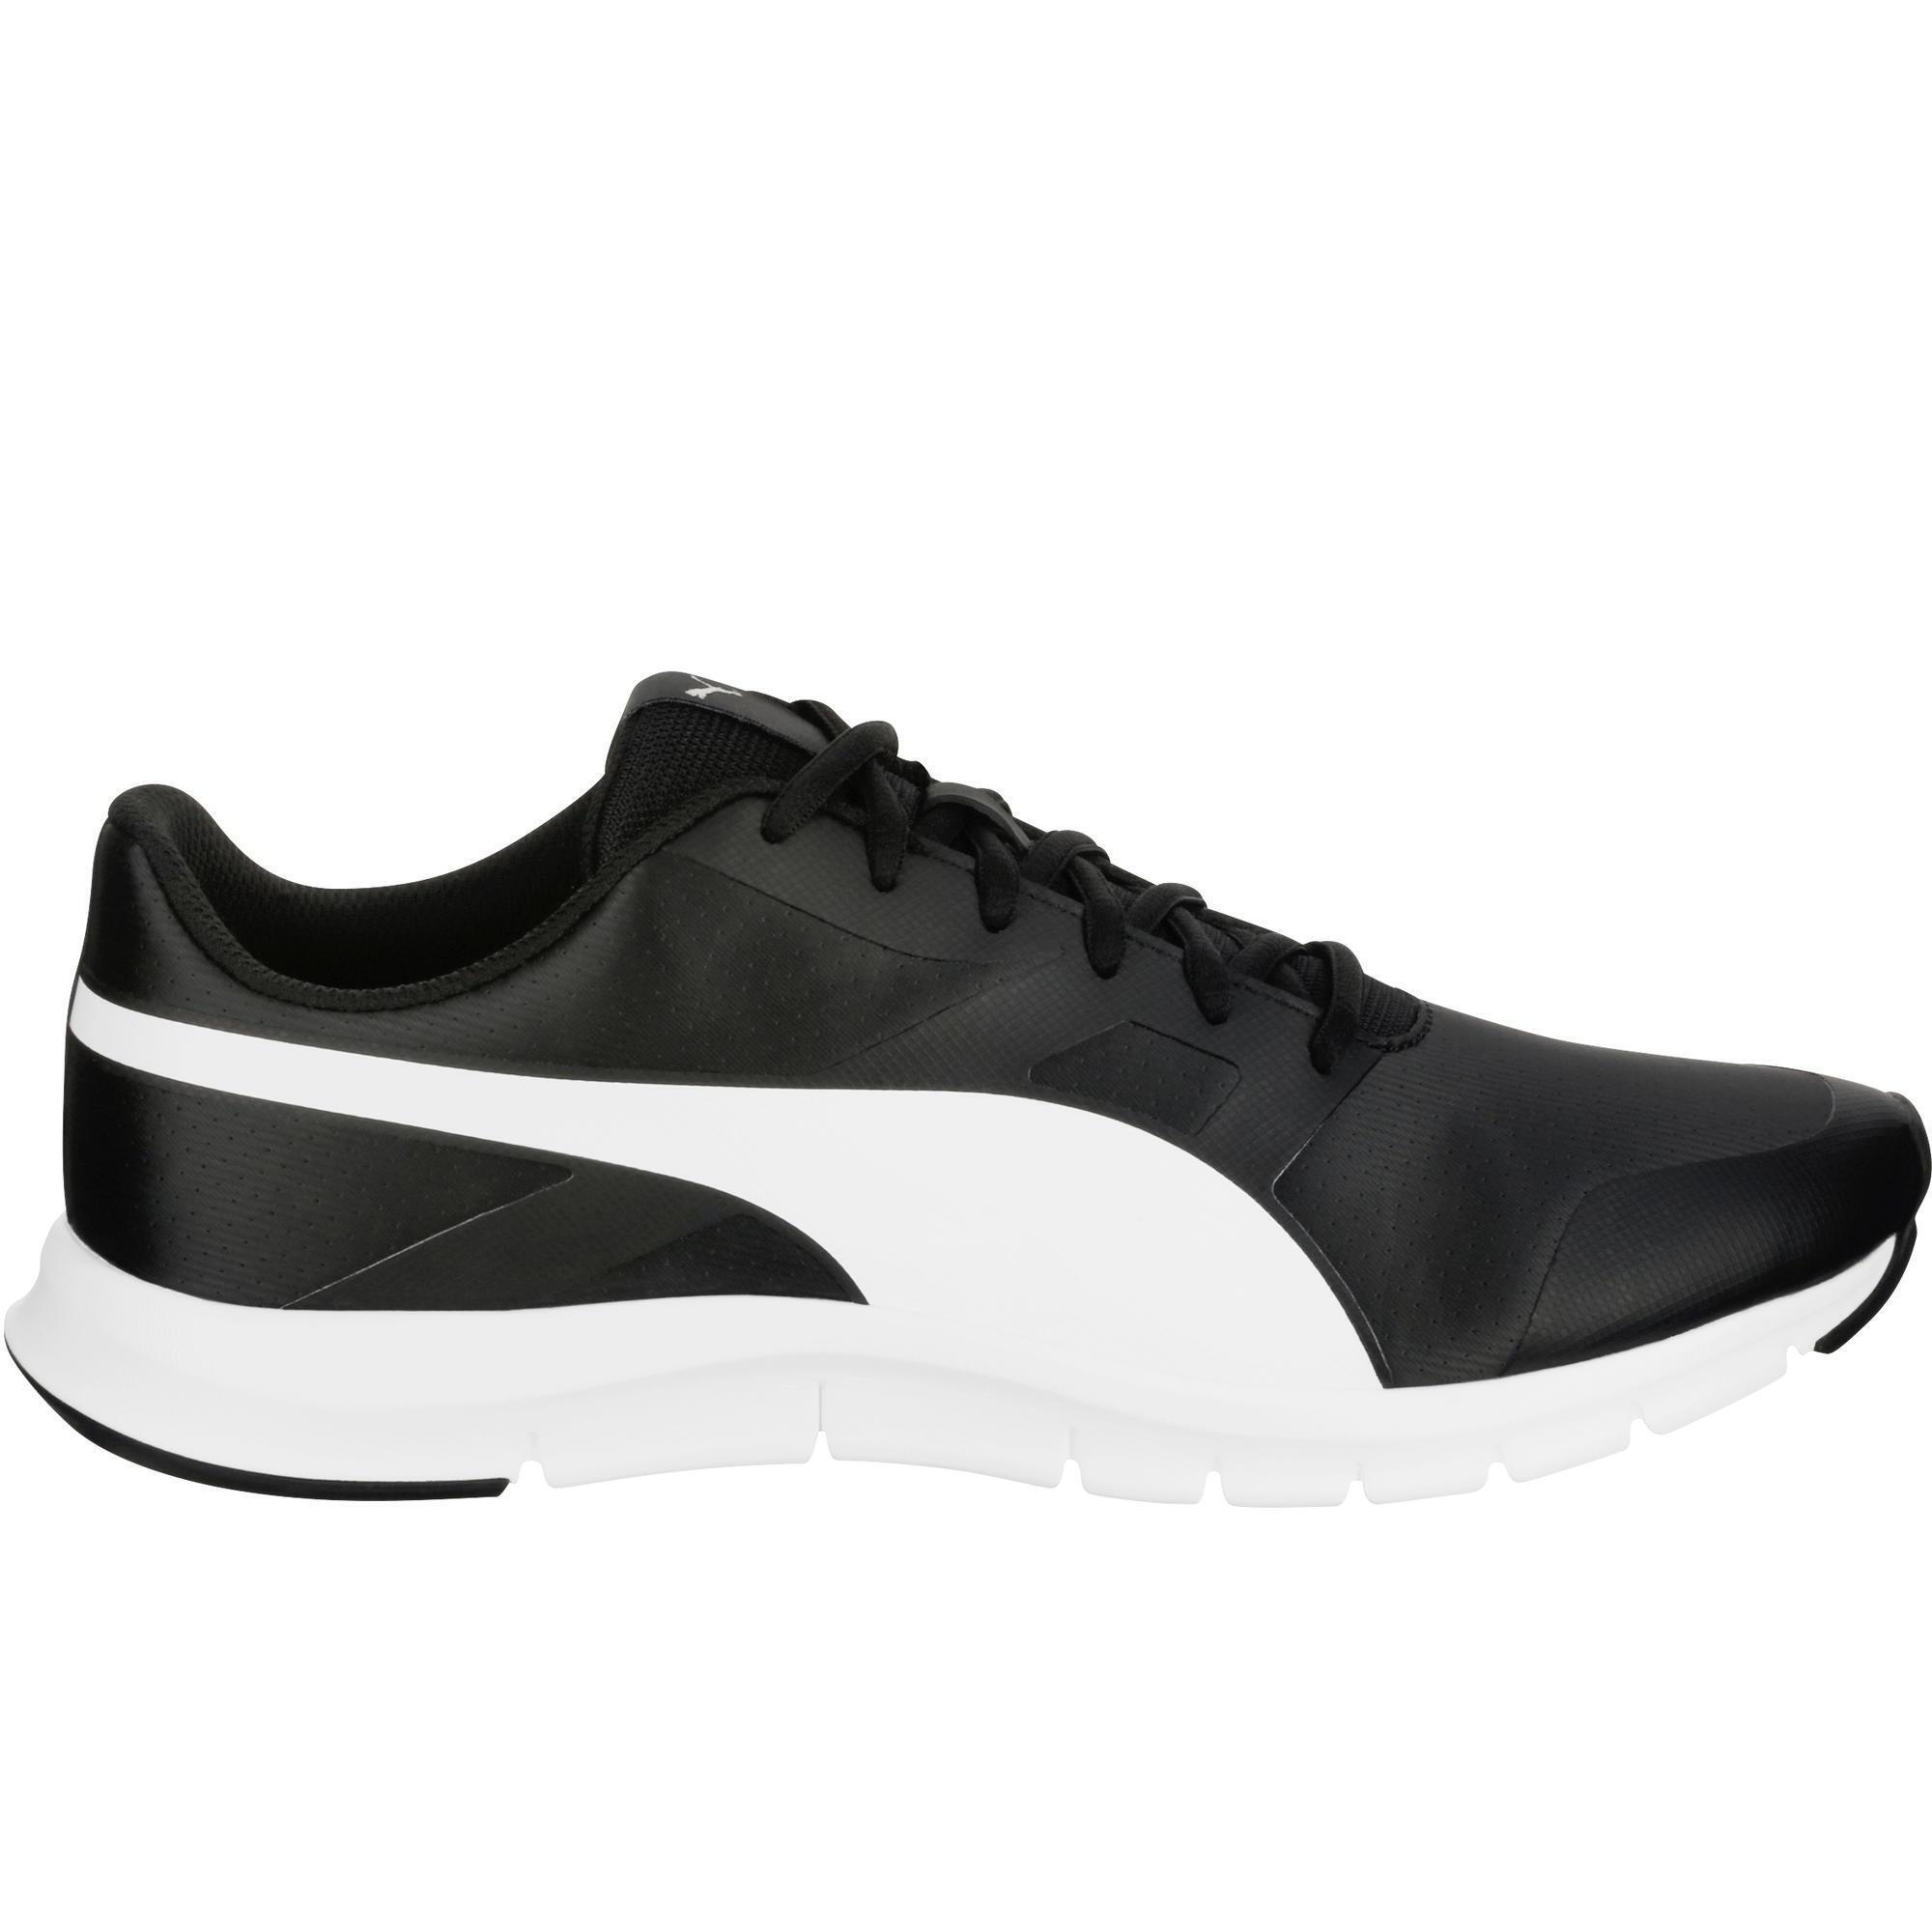 Flexracer men's active walking shoes - black 2/9